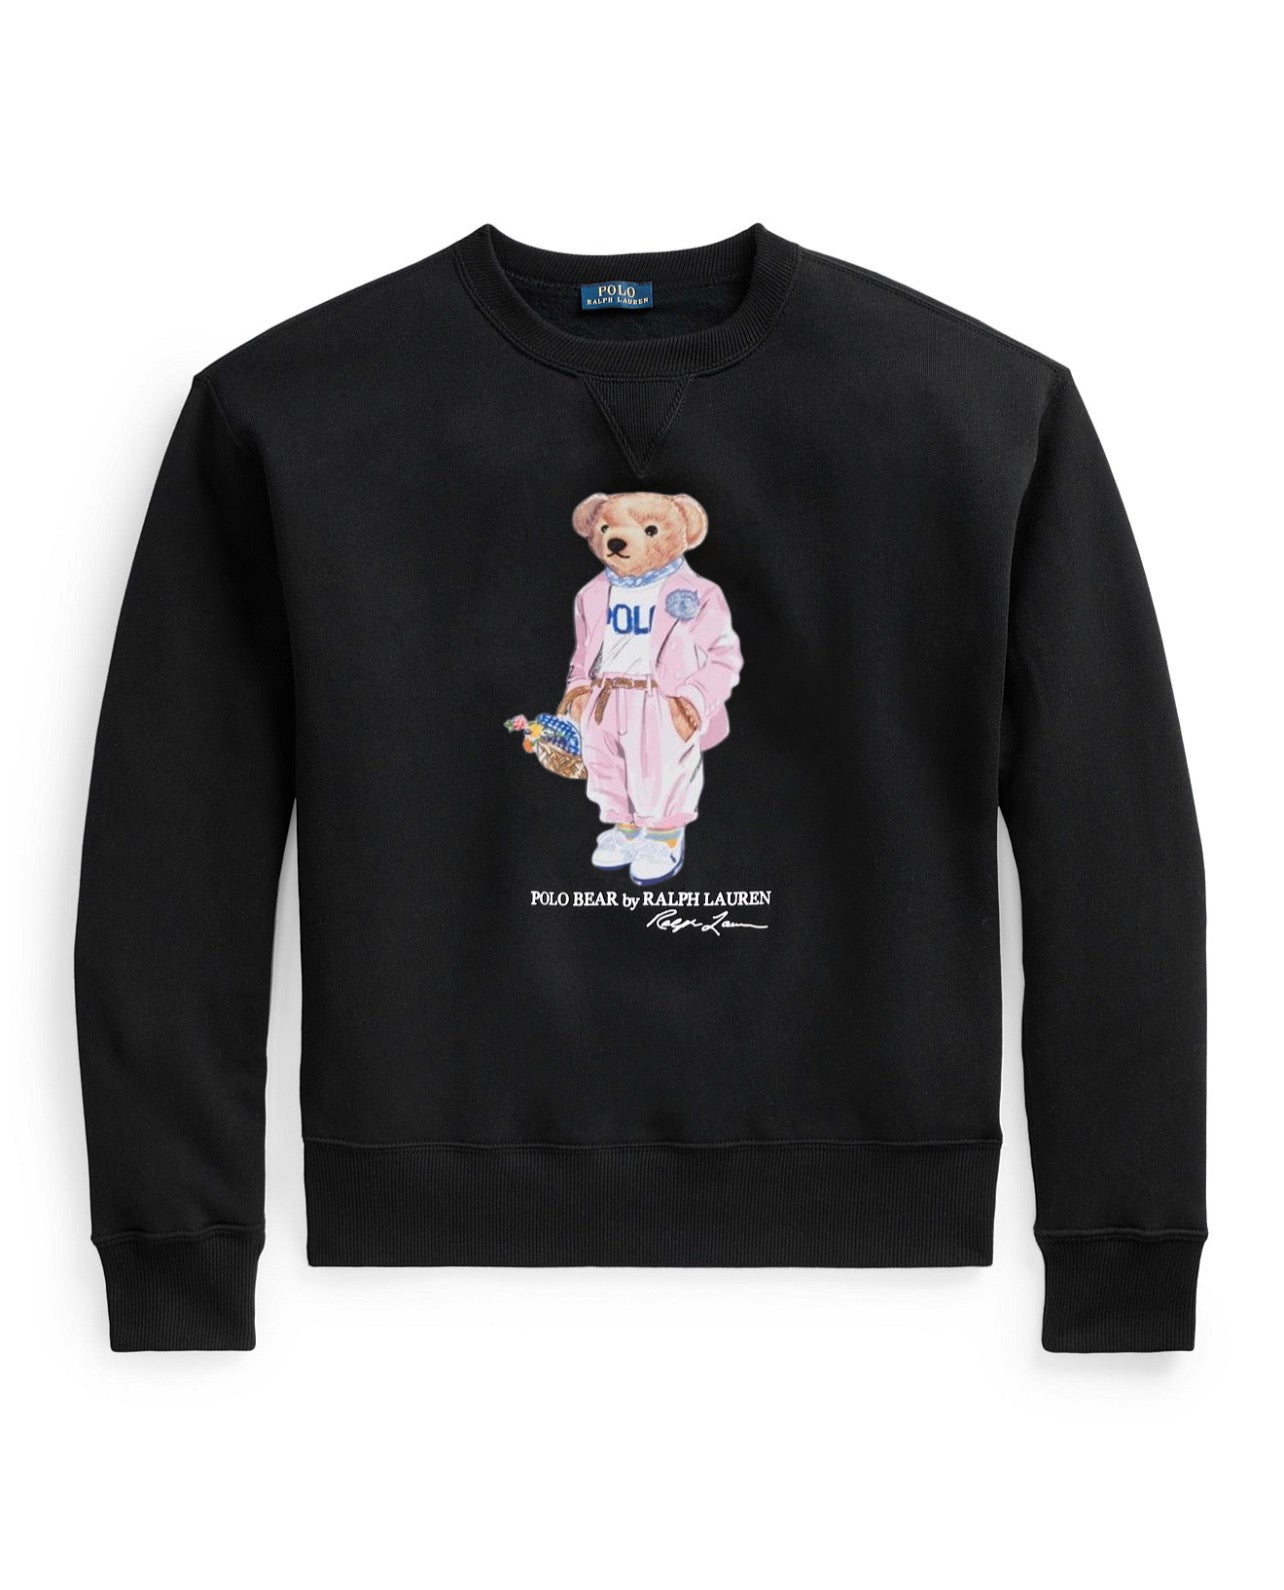 Ralph Lauren Fleece Picnic Polo Bear
Sweatshirt